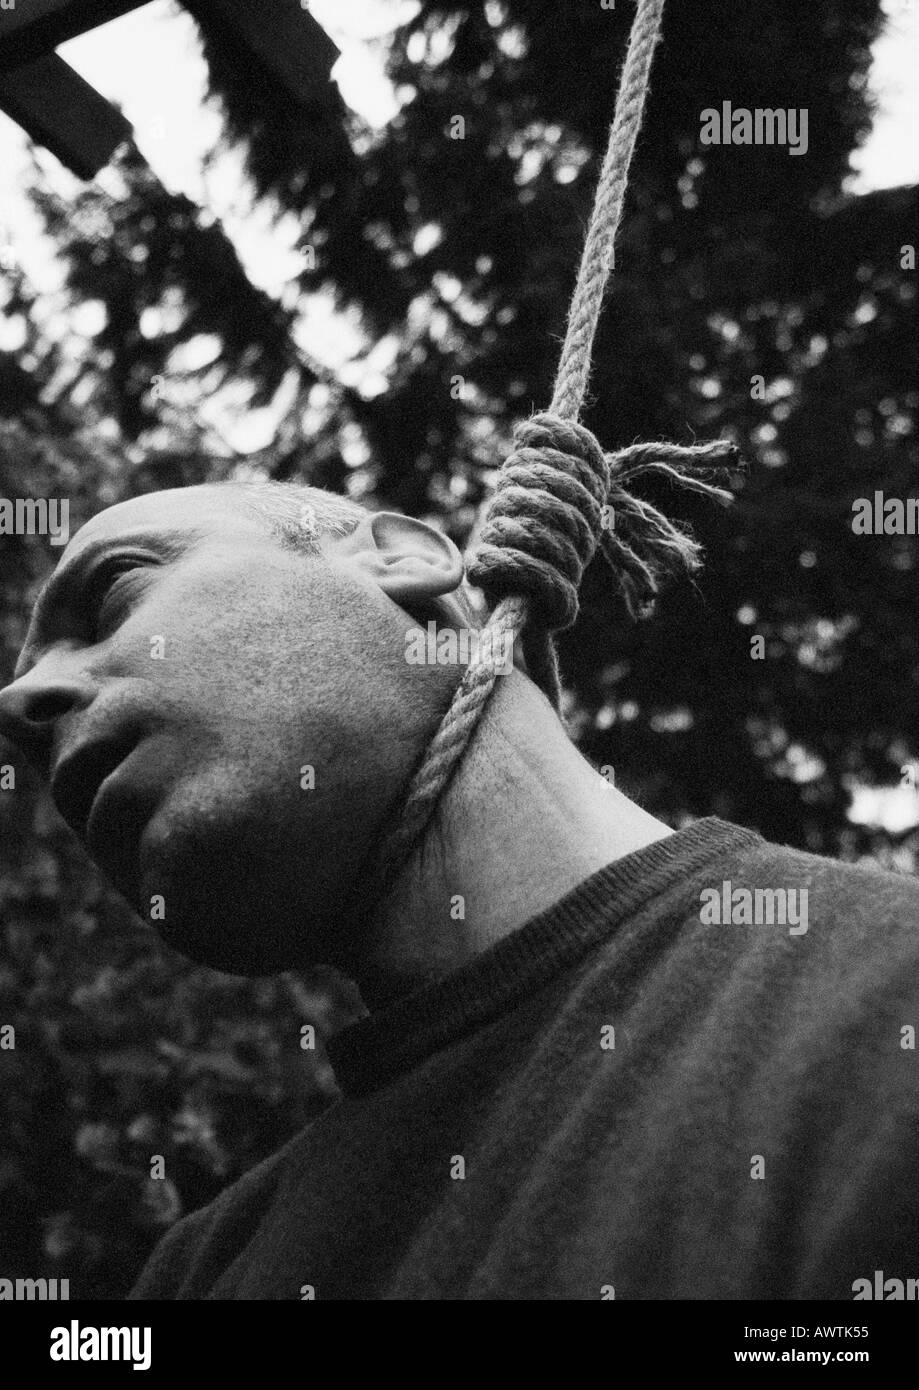 Hanged man, close-up, low-angle shot, b&w Stock Photo